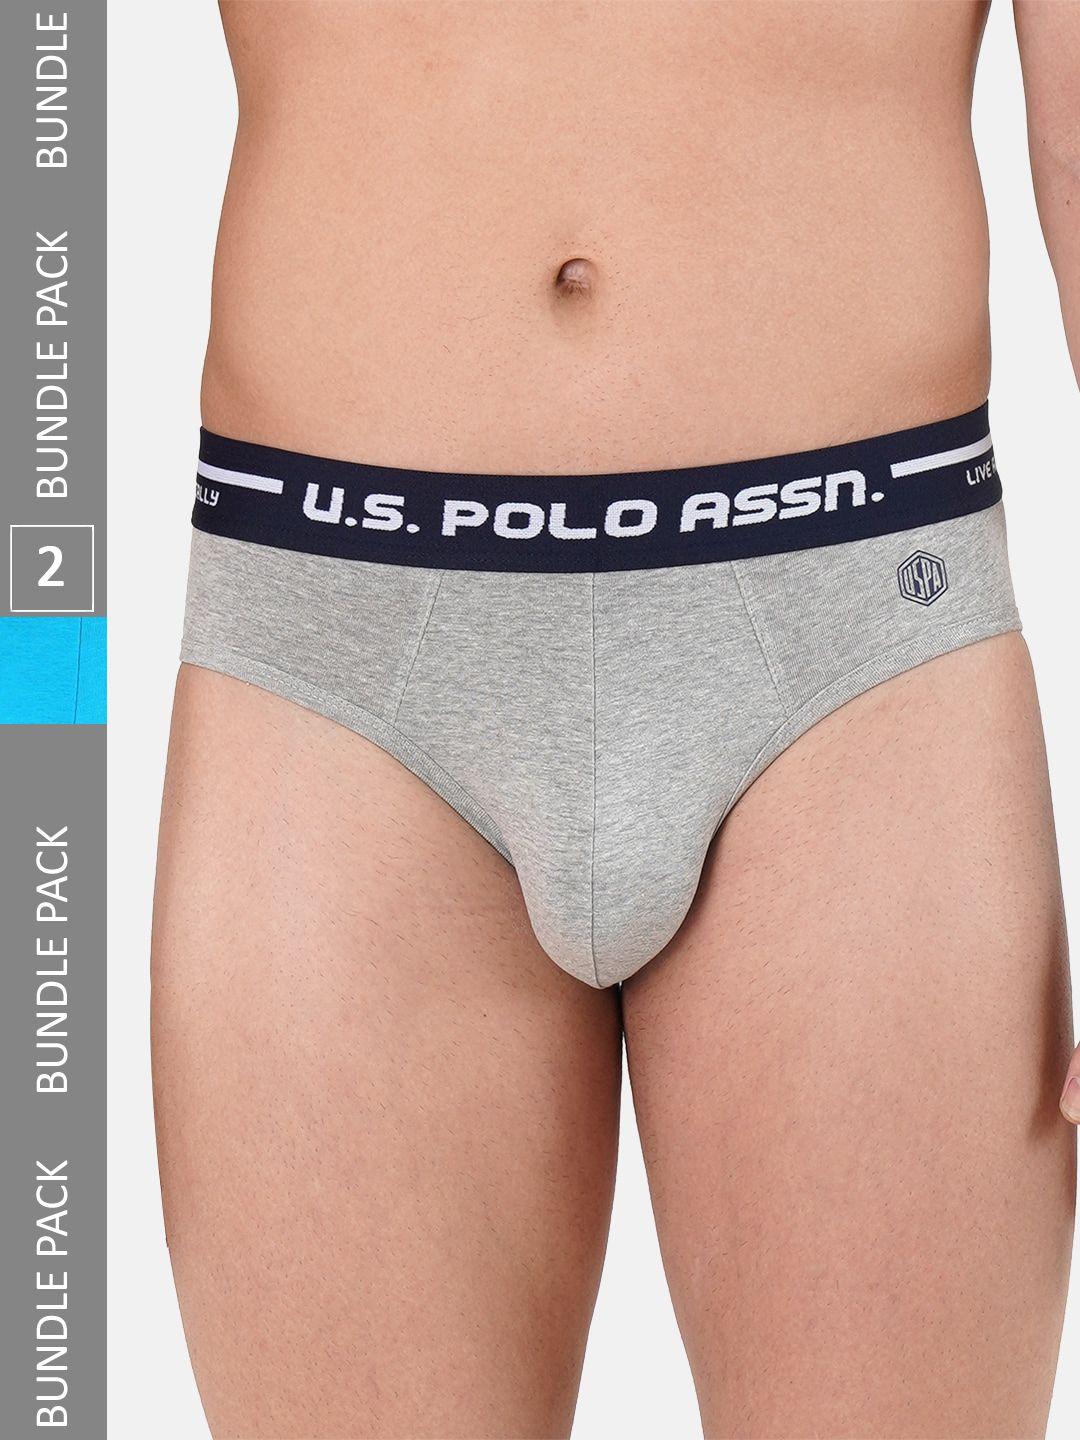 u.s. polo assn. men pack of 2 printed logo waistband basic briefs